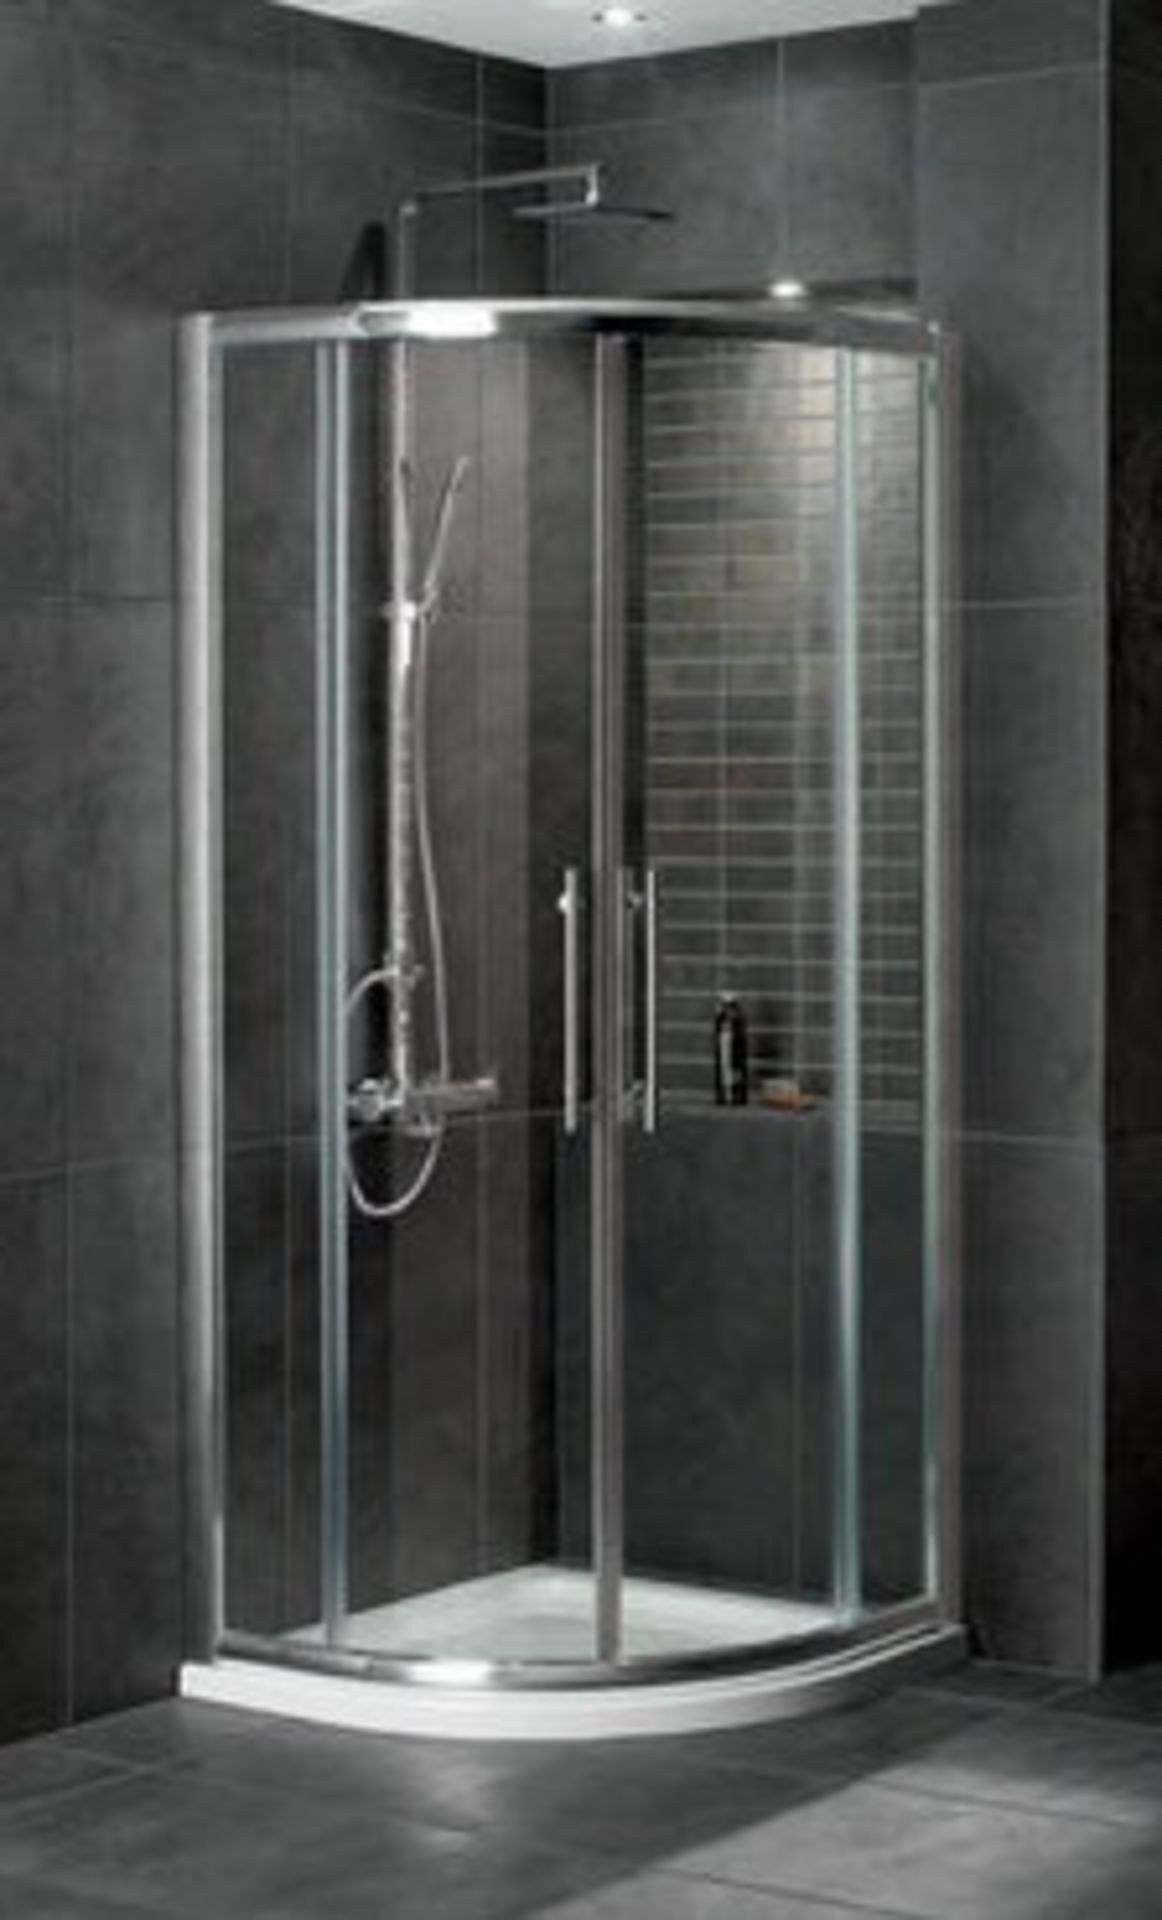 1 x Aqua Latus 900mm Double Door Quad Shower Enclosure - Polished Chrome Finish - Chrome on Brass